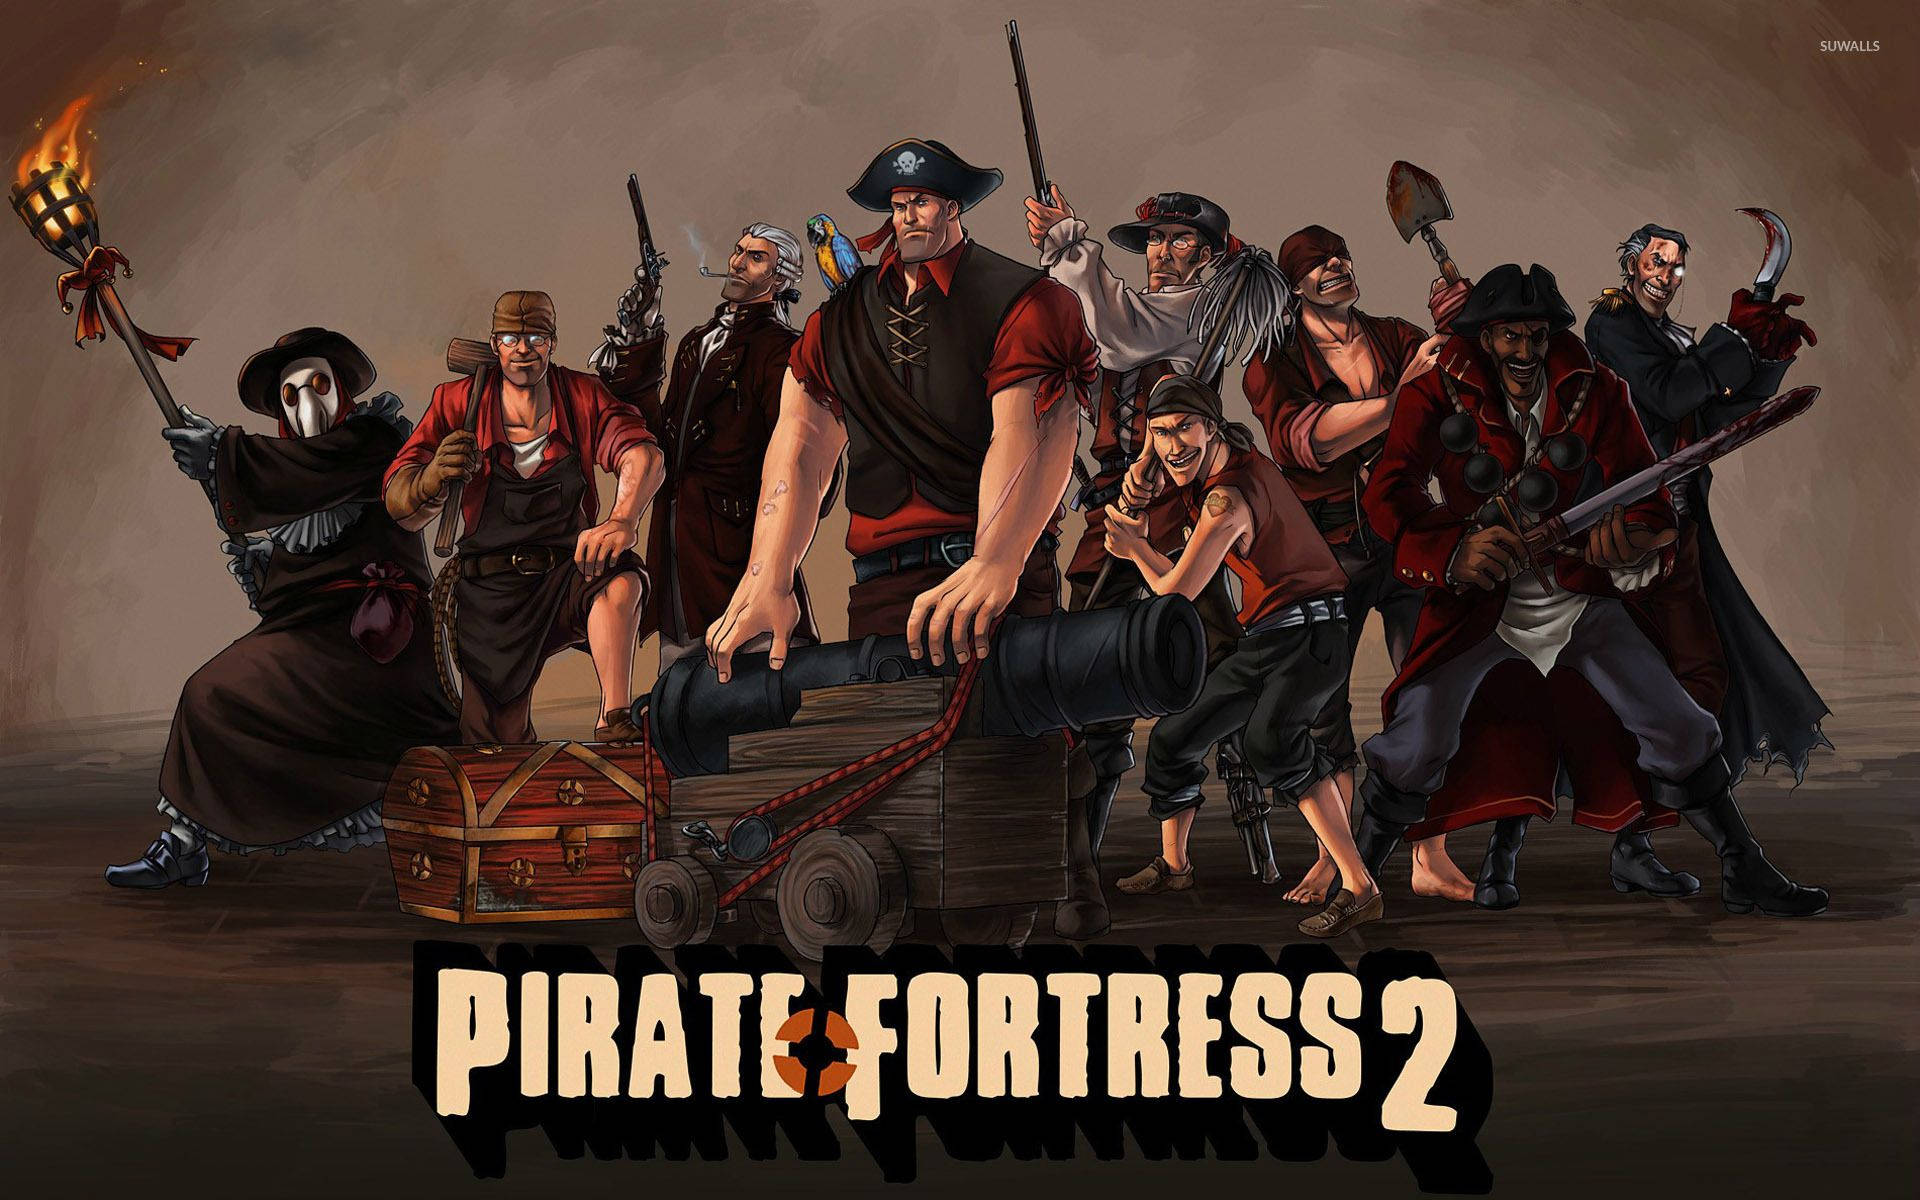 Team Fortress 2 Pirate Fanart Wallpaper